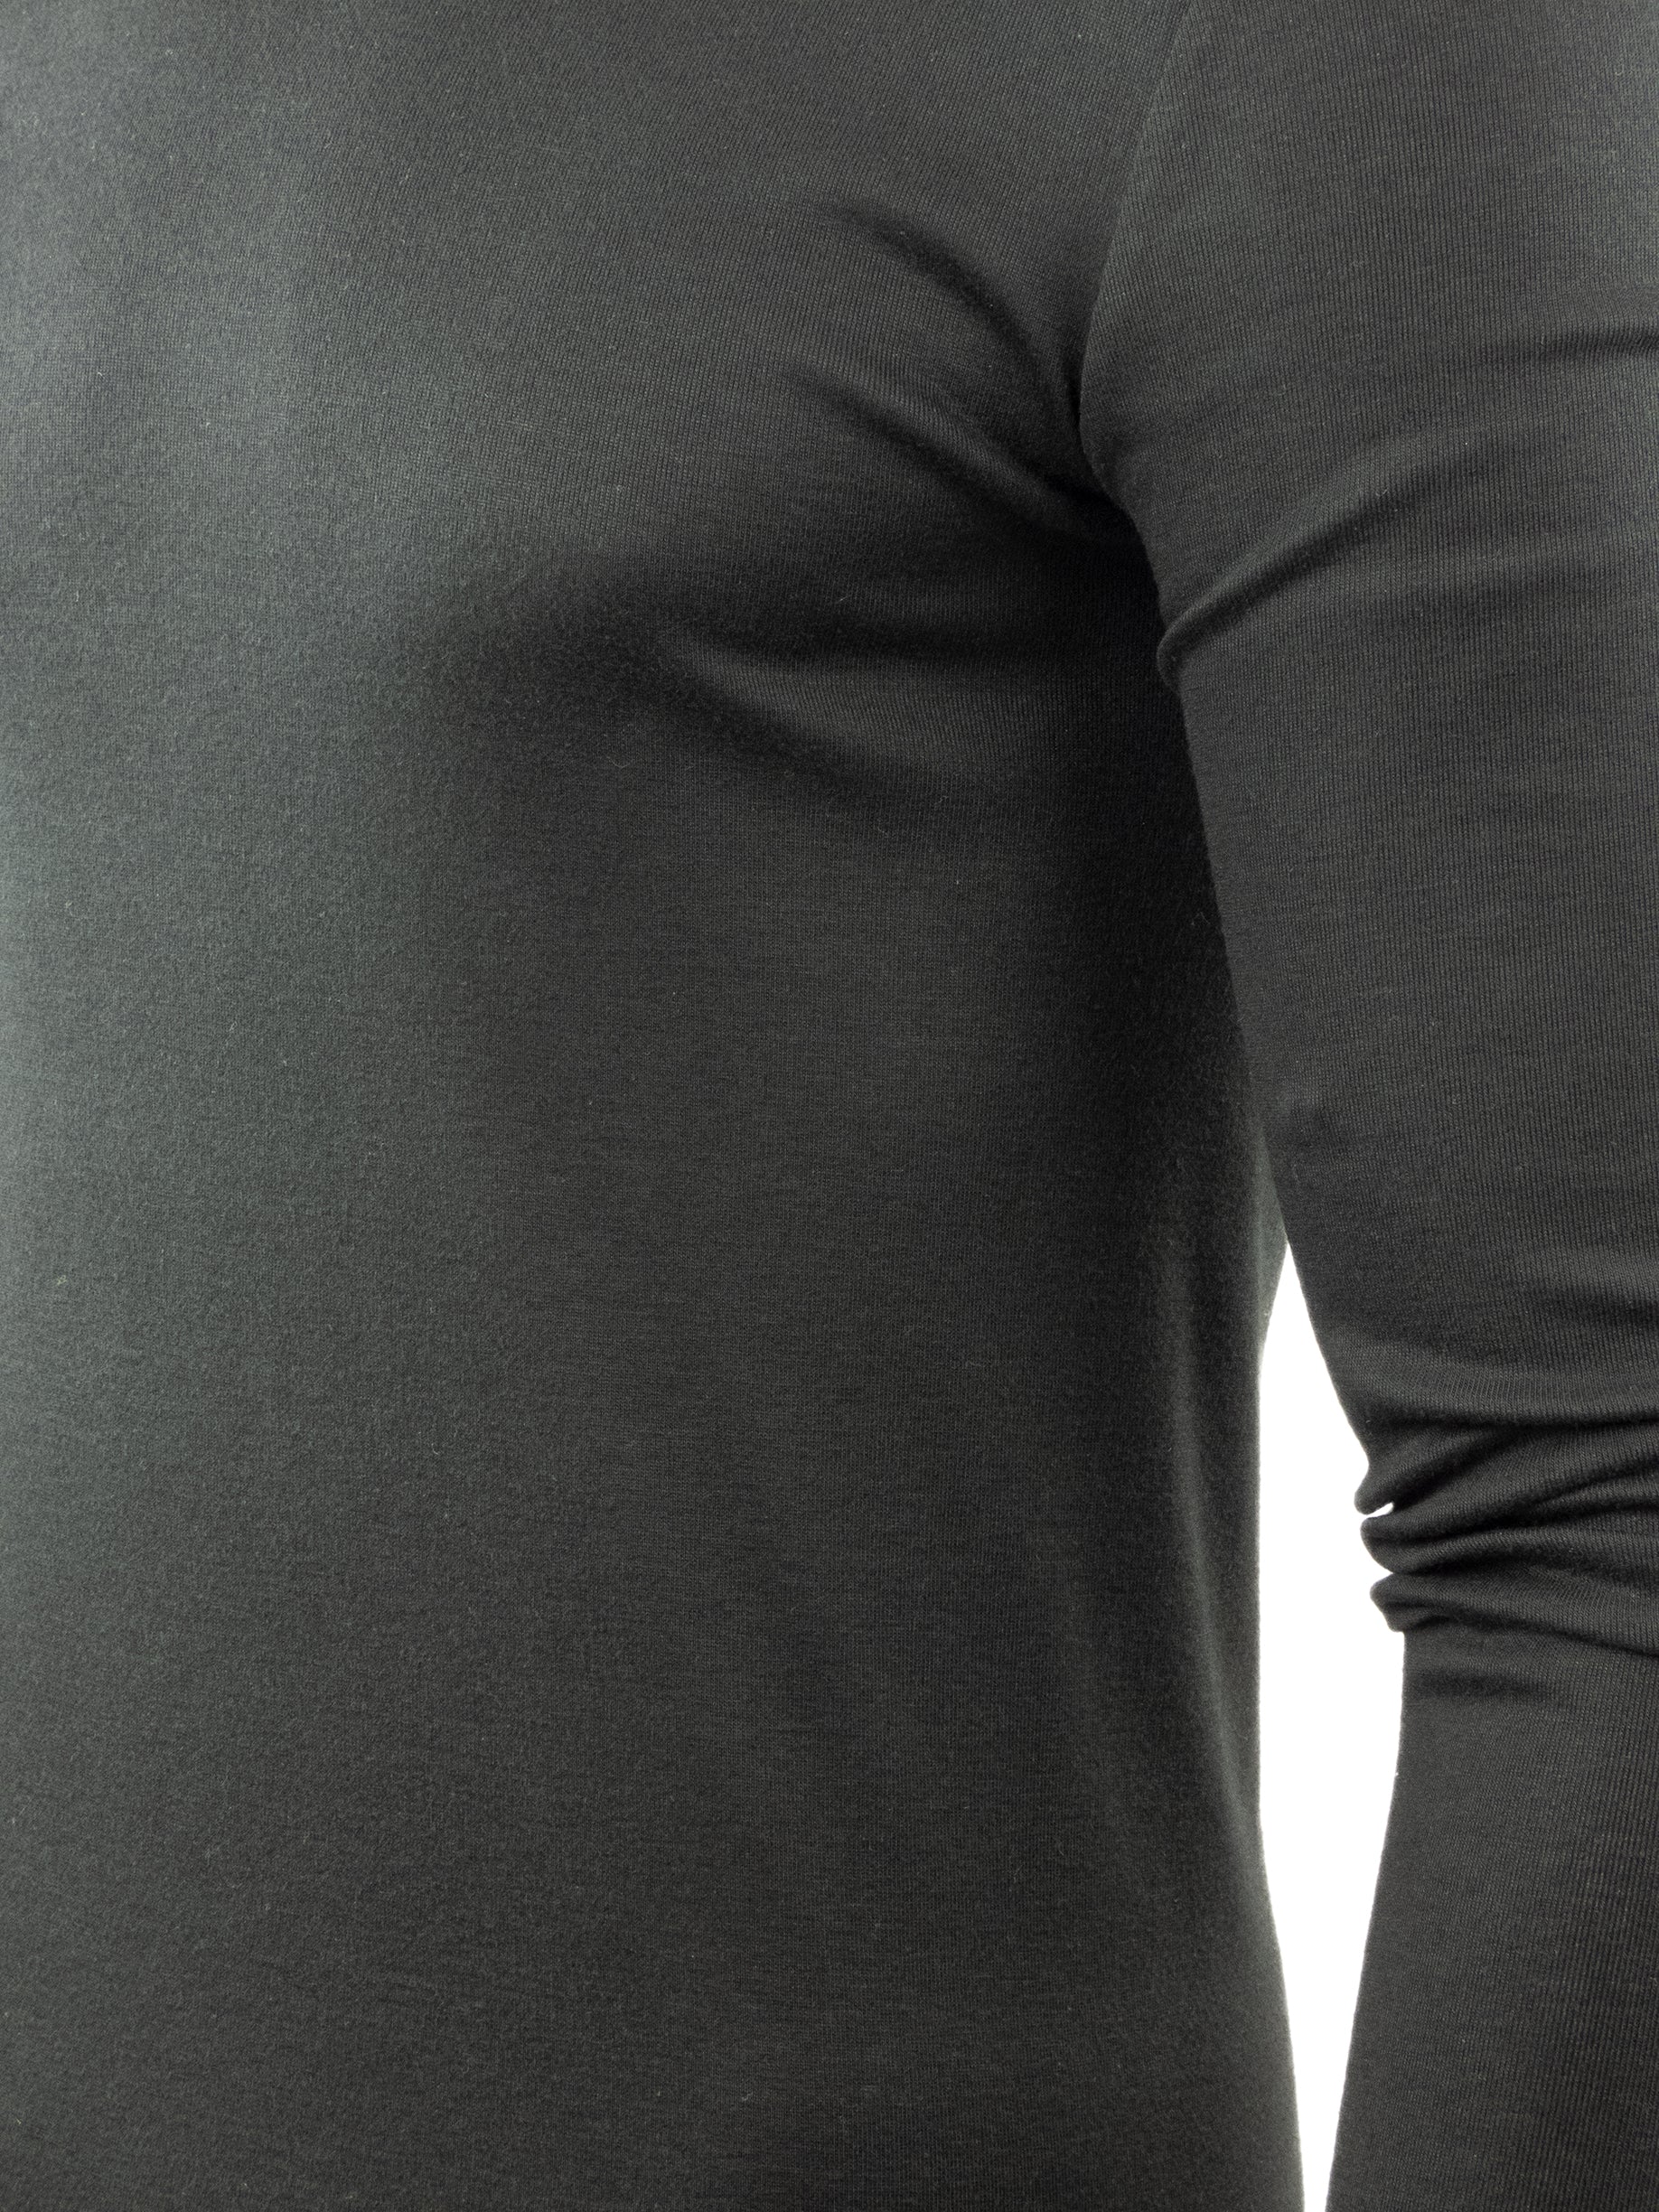 Raw Hem Long Sleeve T-Shirt in Black